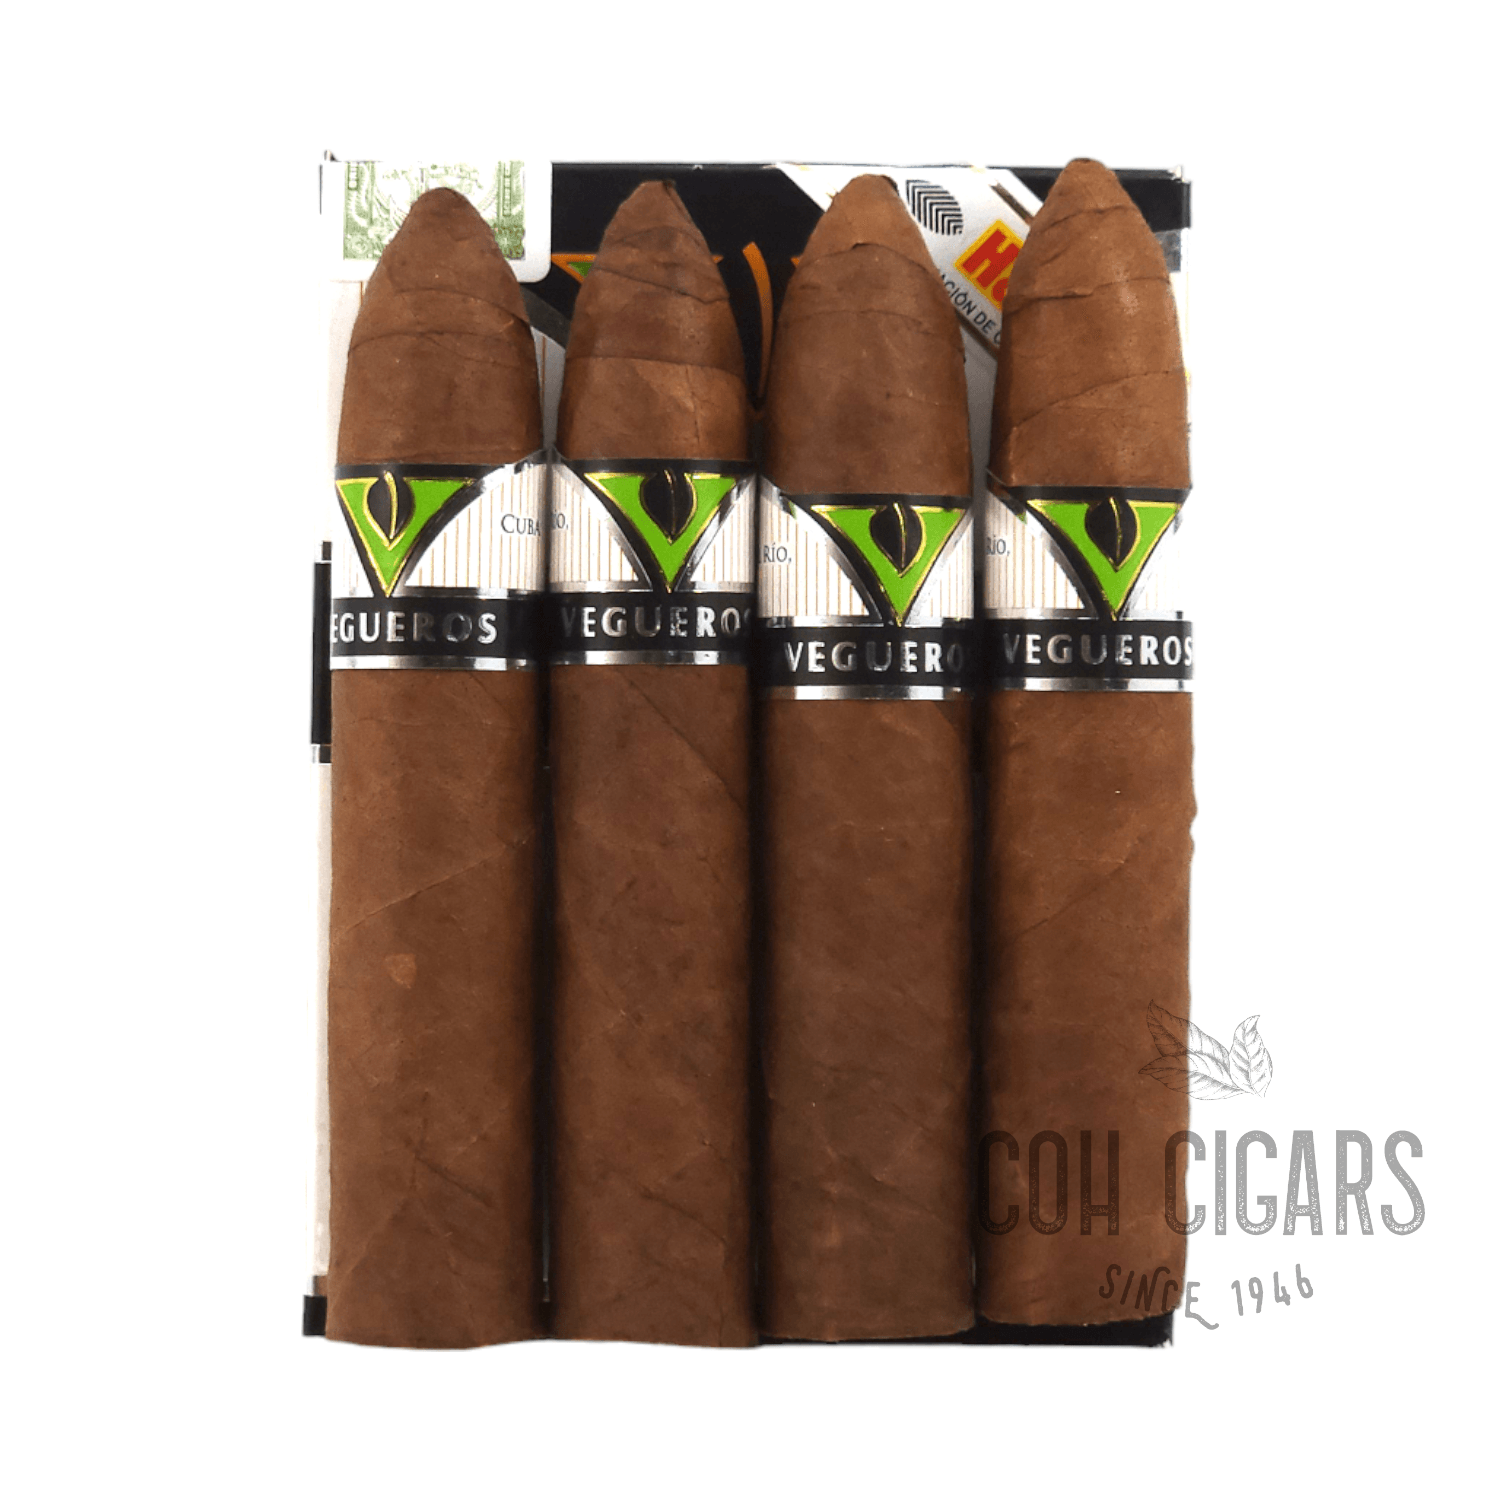 Vegueros Cigars |Vegueros Mananitas | Box 4X4 - hk.cohcigars